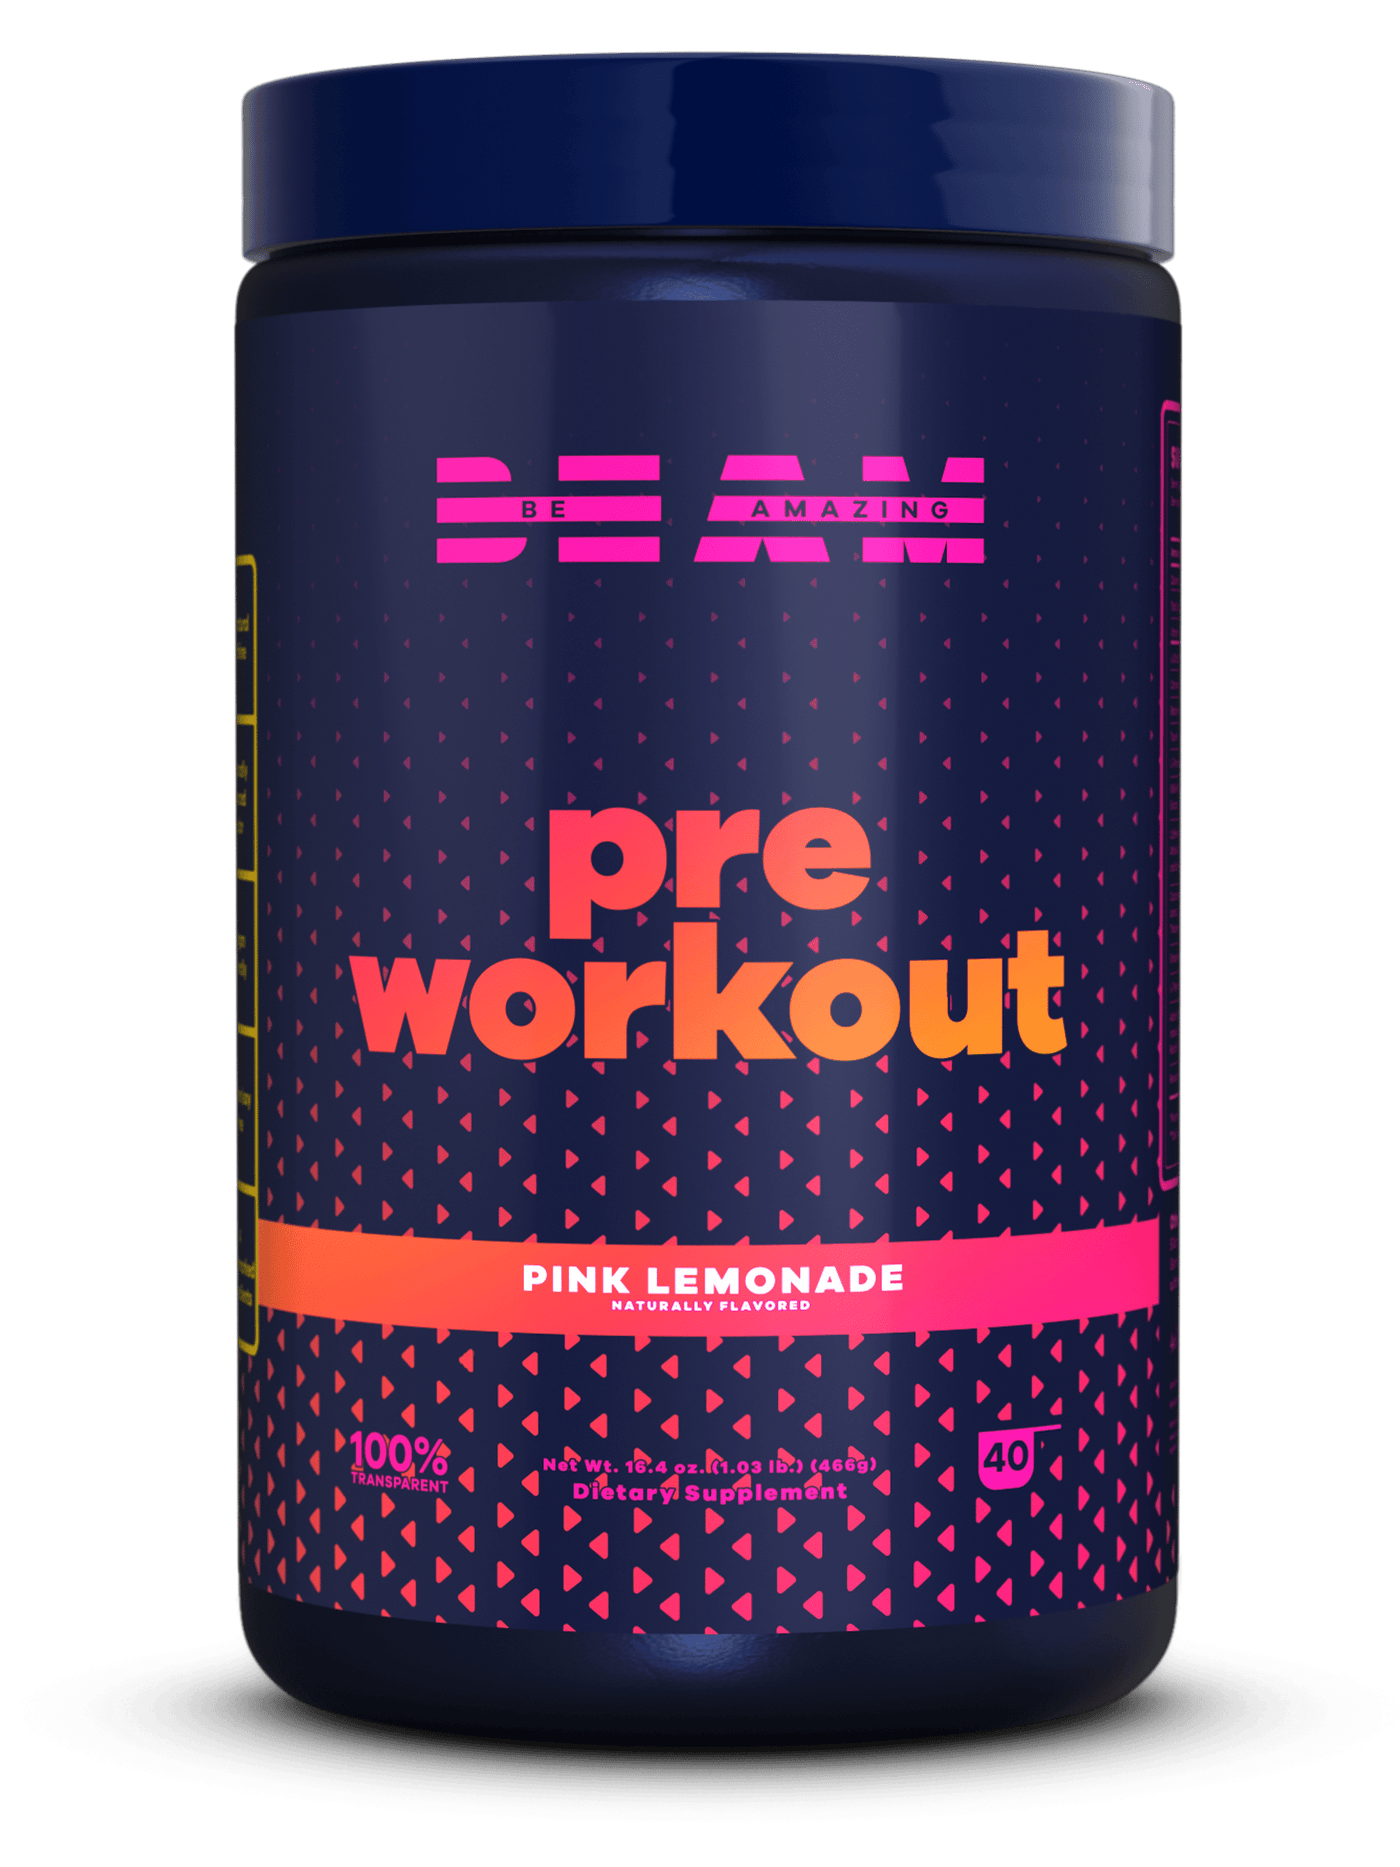 pink lemonade pre workout#40 Scoops / Pink Lemonade